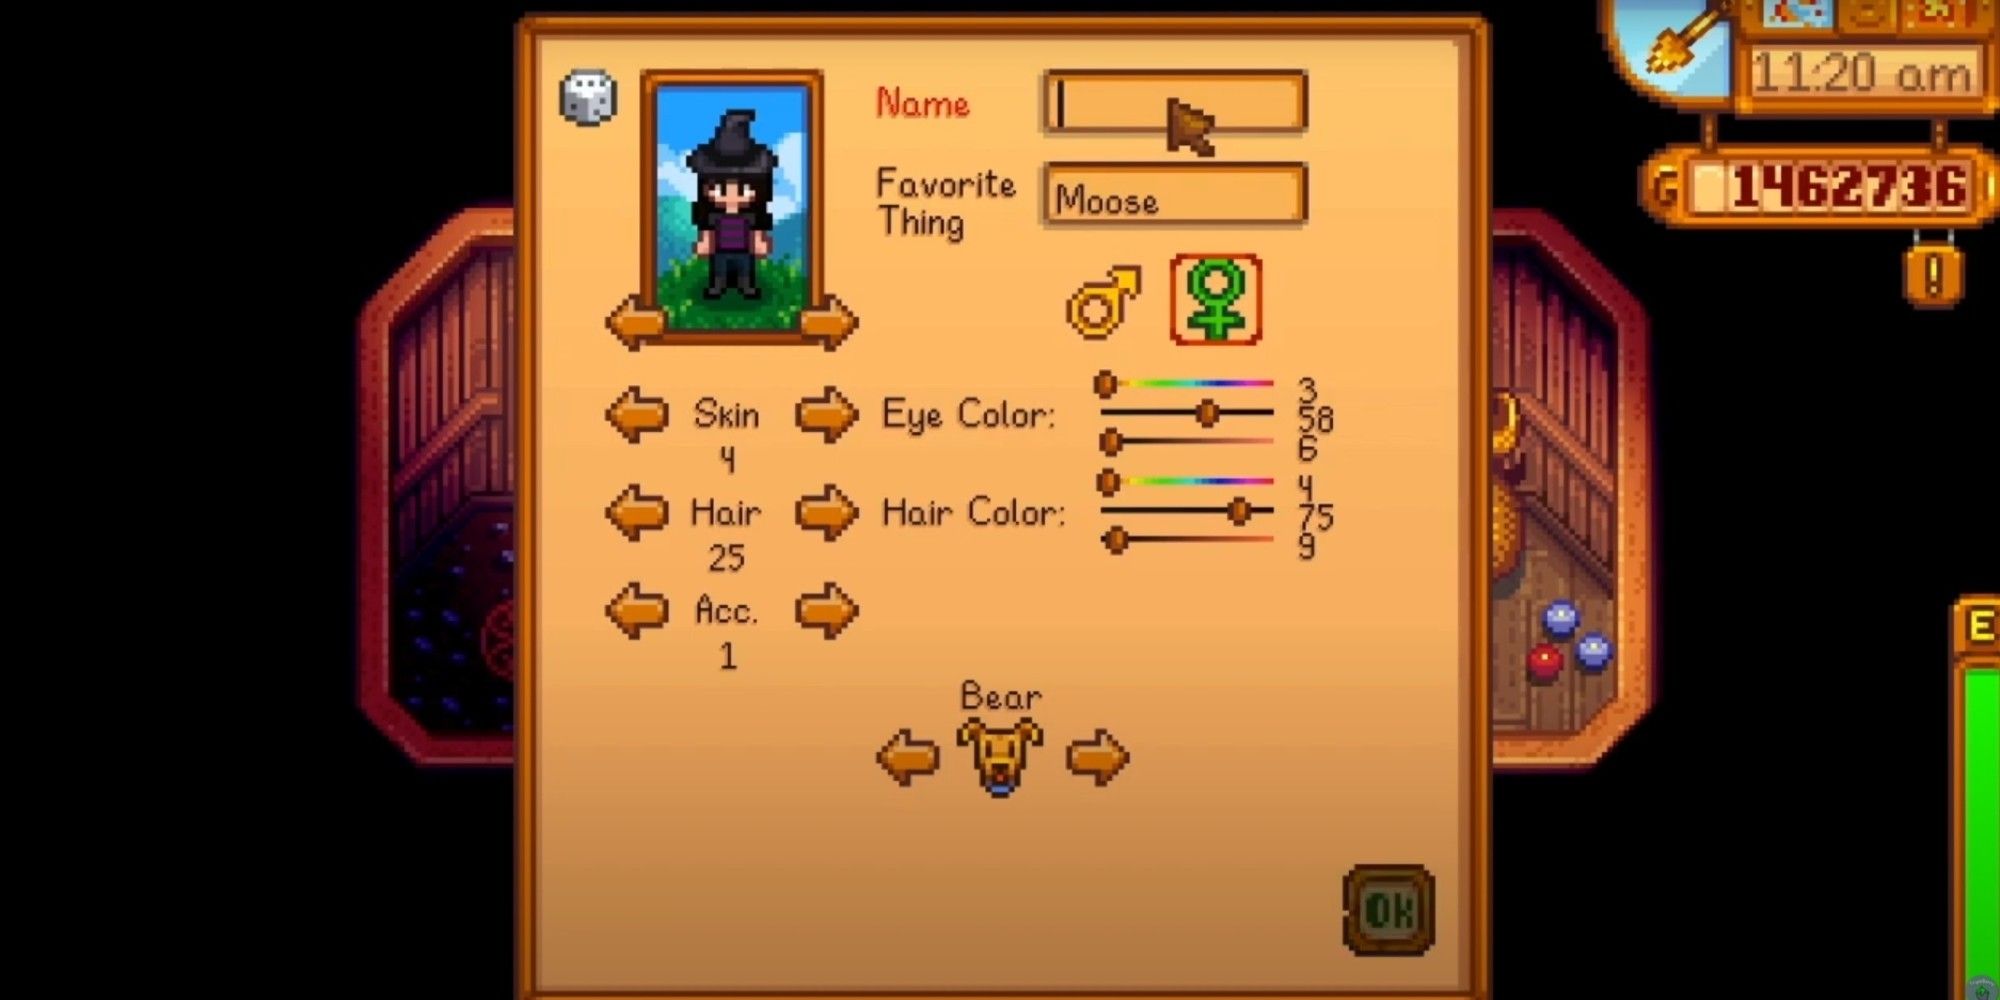 player accessing character customization menu at shrine of illusion